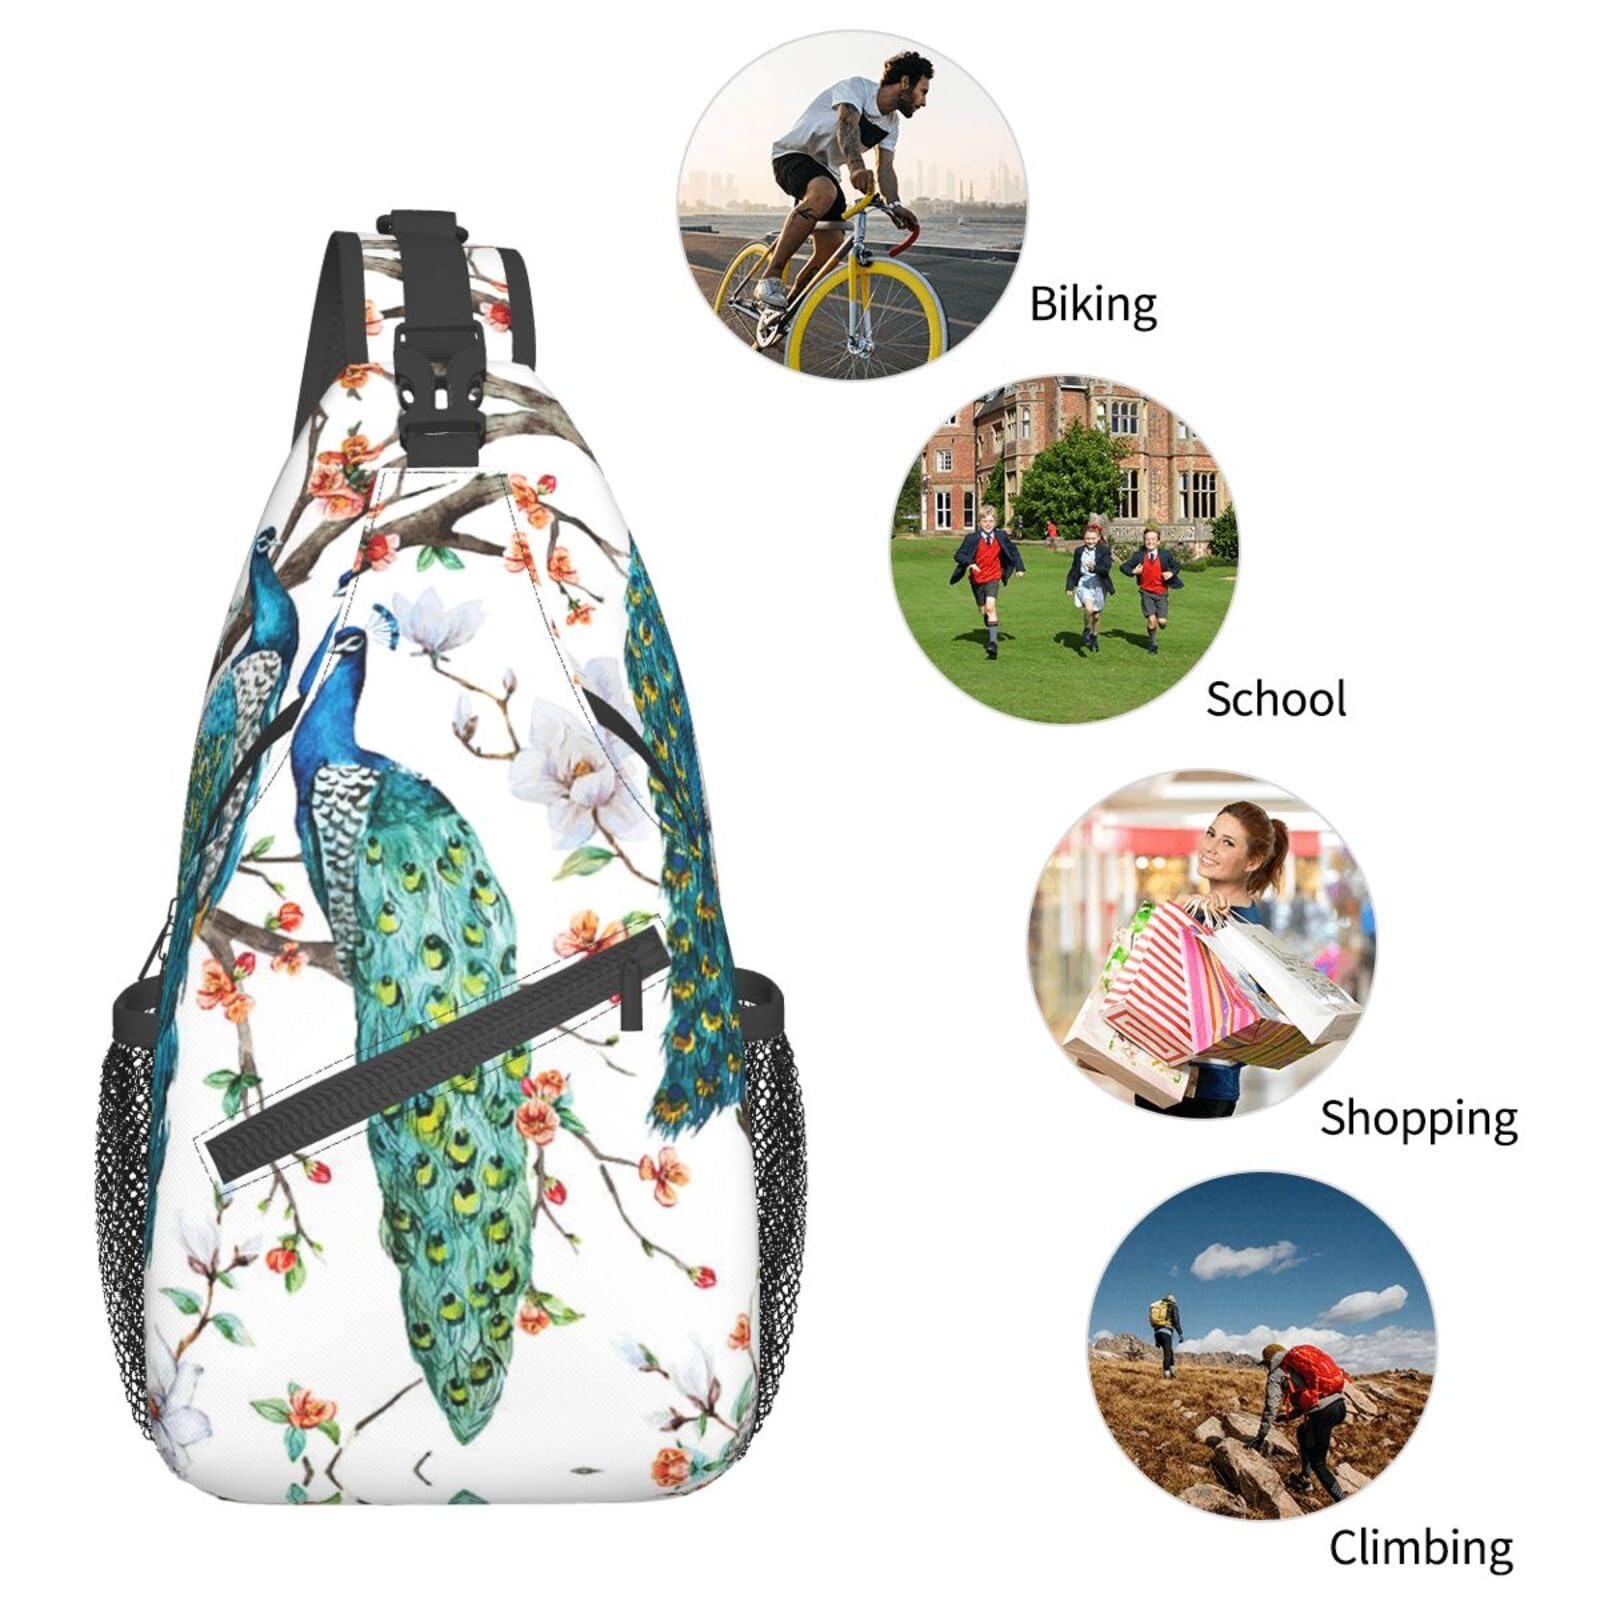 MQGMZ Sling Backpack,Travel Hiking Daypack Beautiful Peacock Flowers Print Rope Crossbody Shoulder Bag